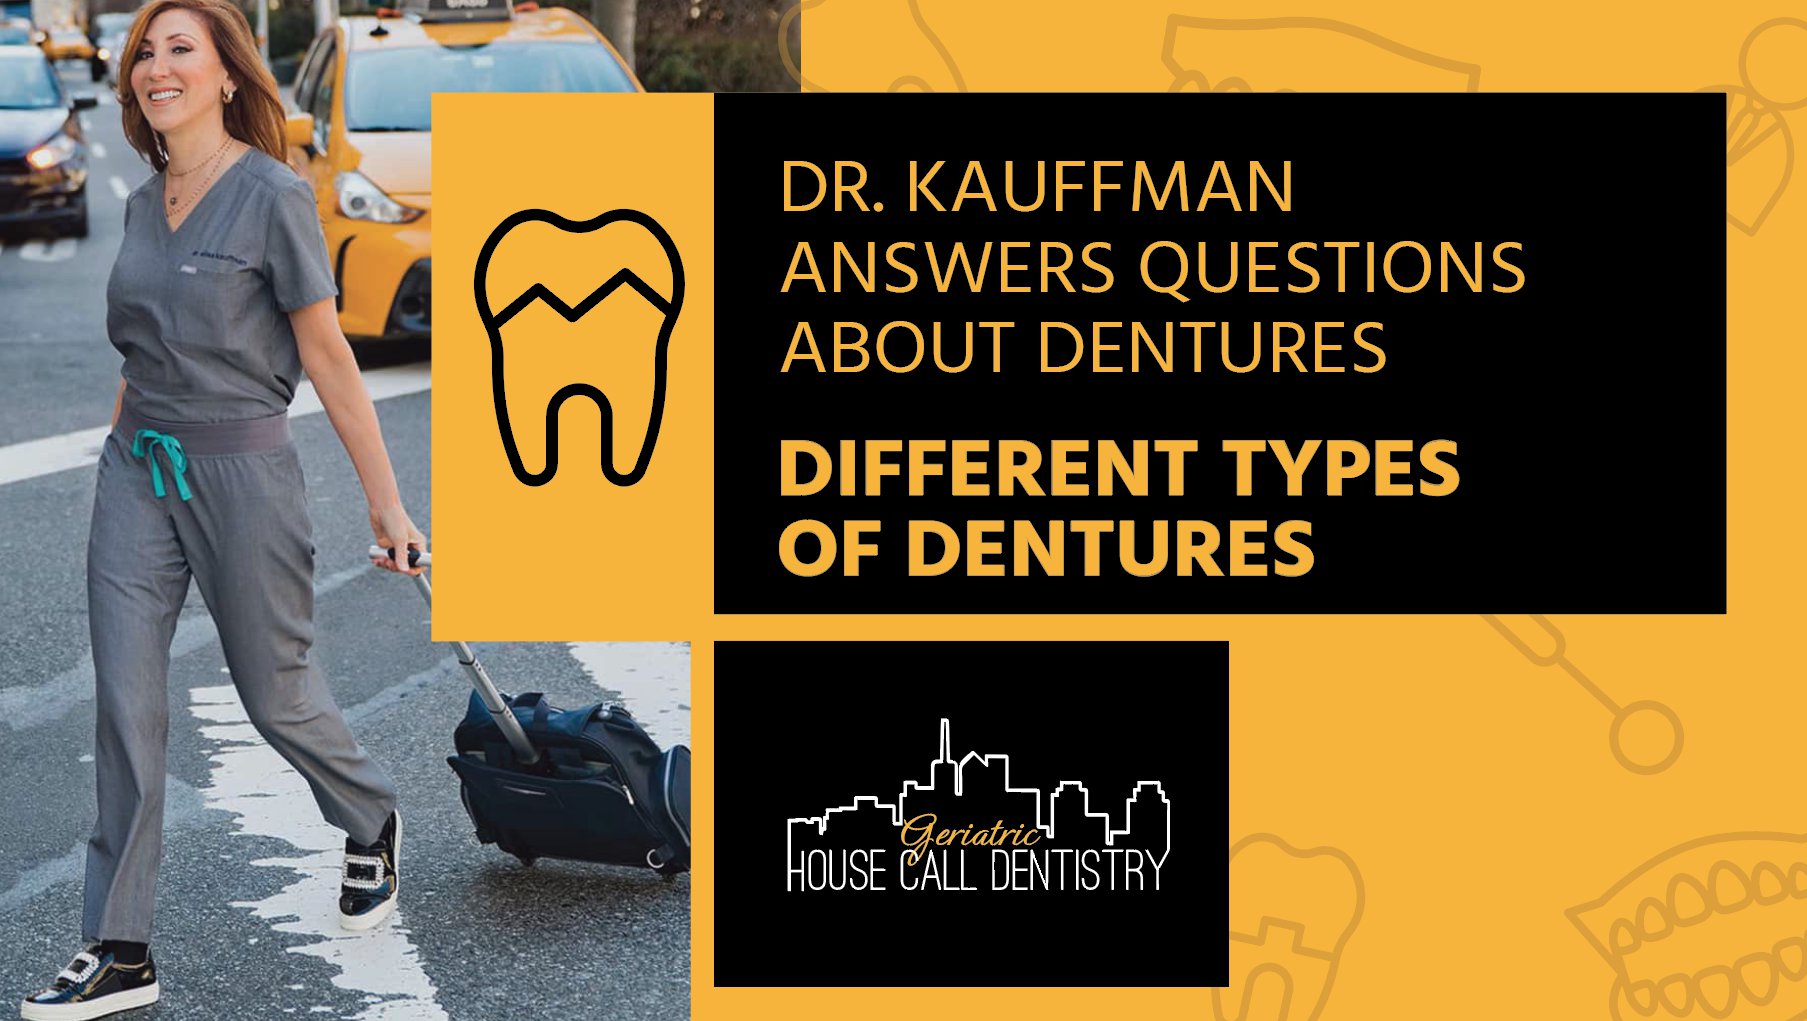 DIFFERENT TYPES of dentures